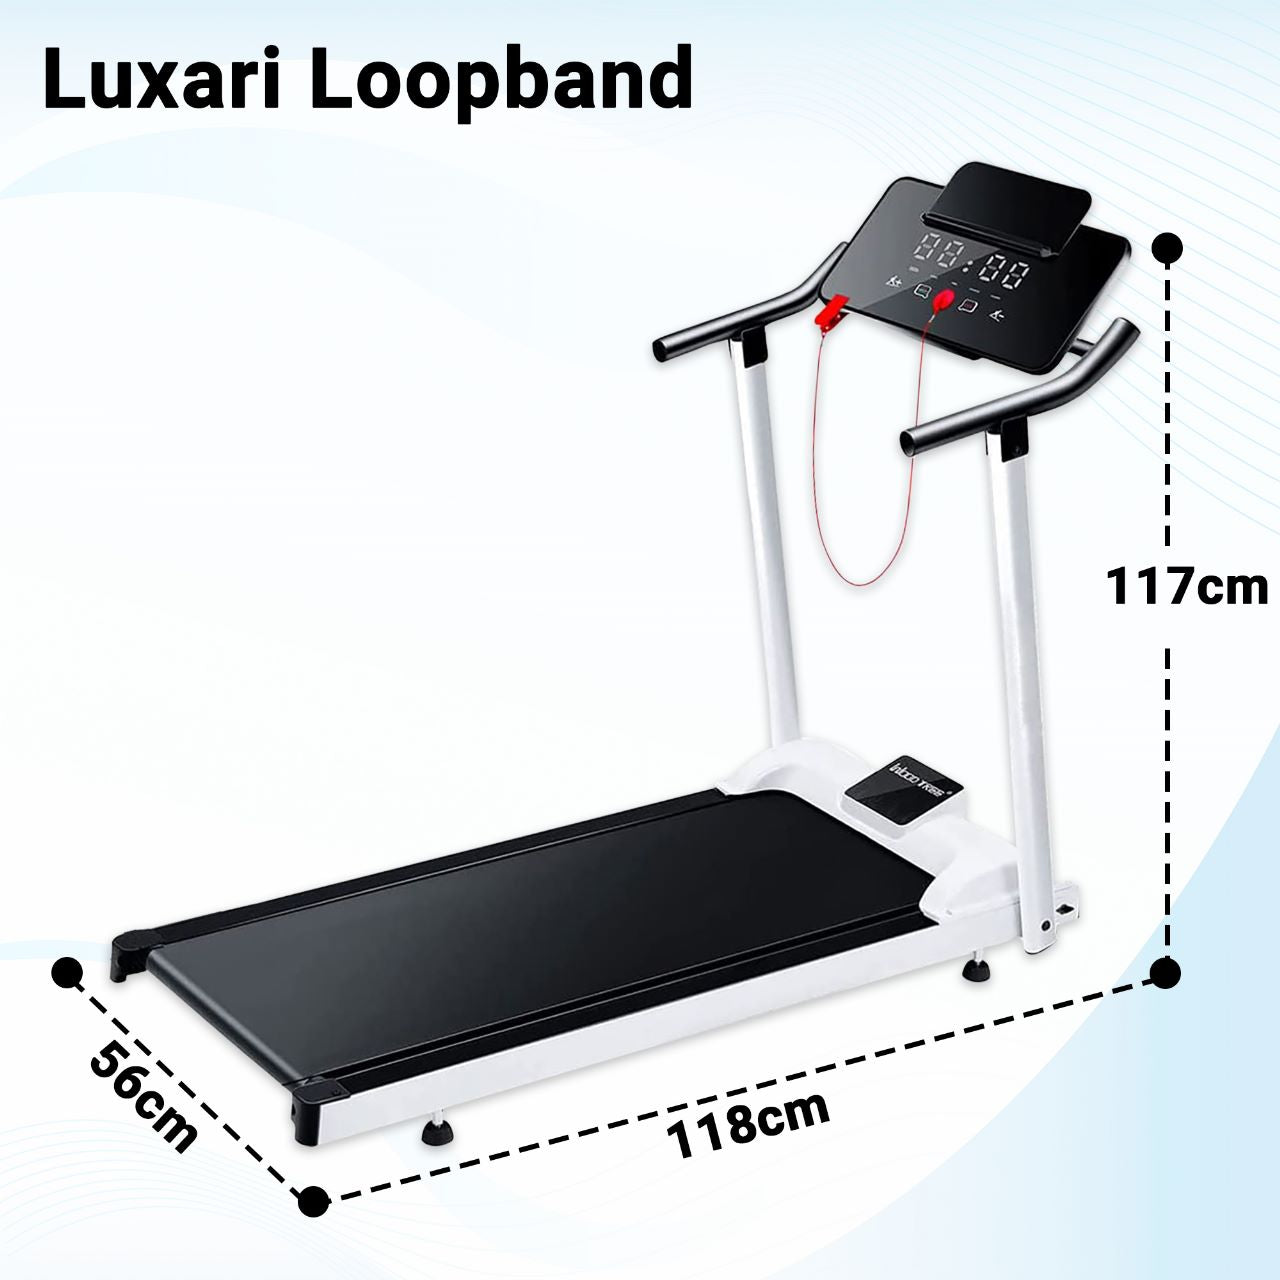 Luxari - Loopband 10 LuxariFitness